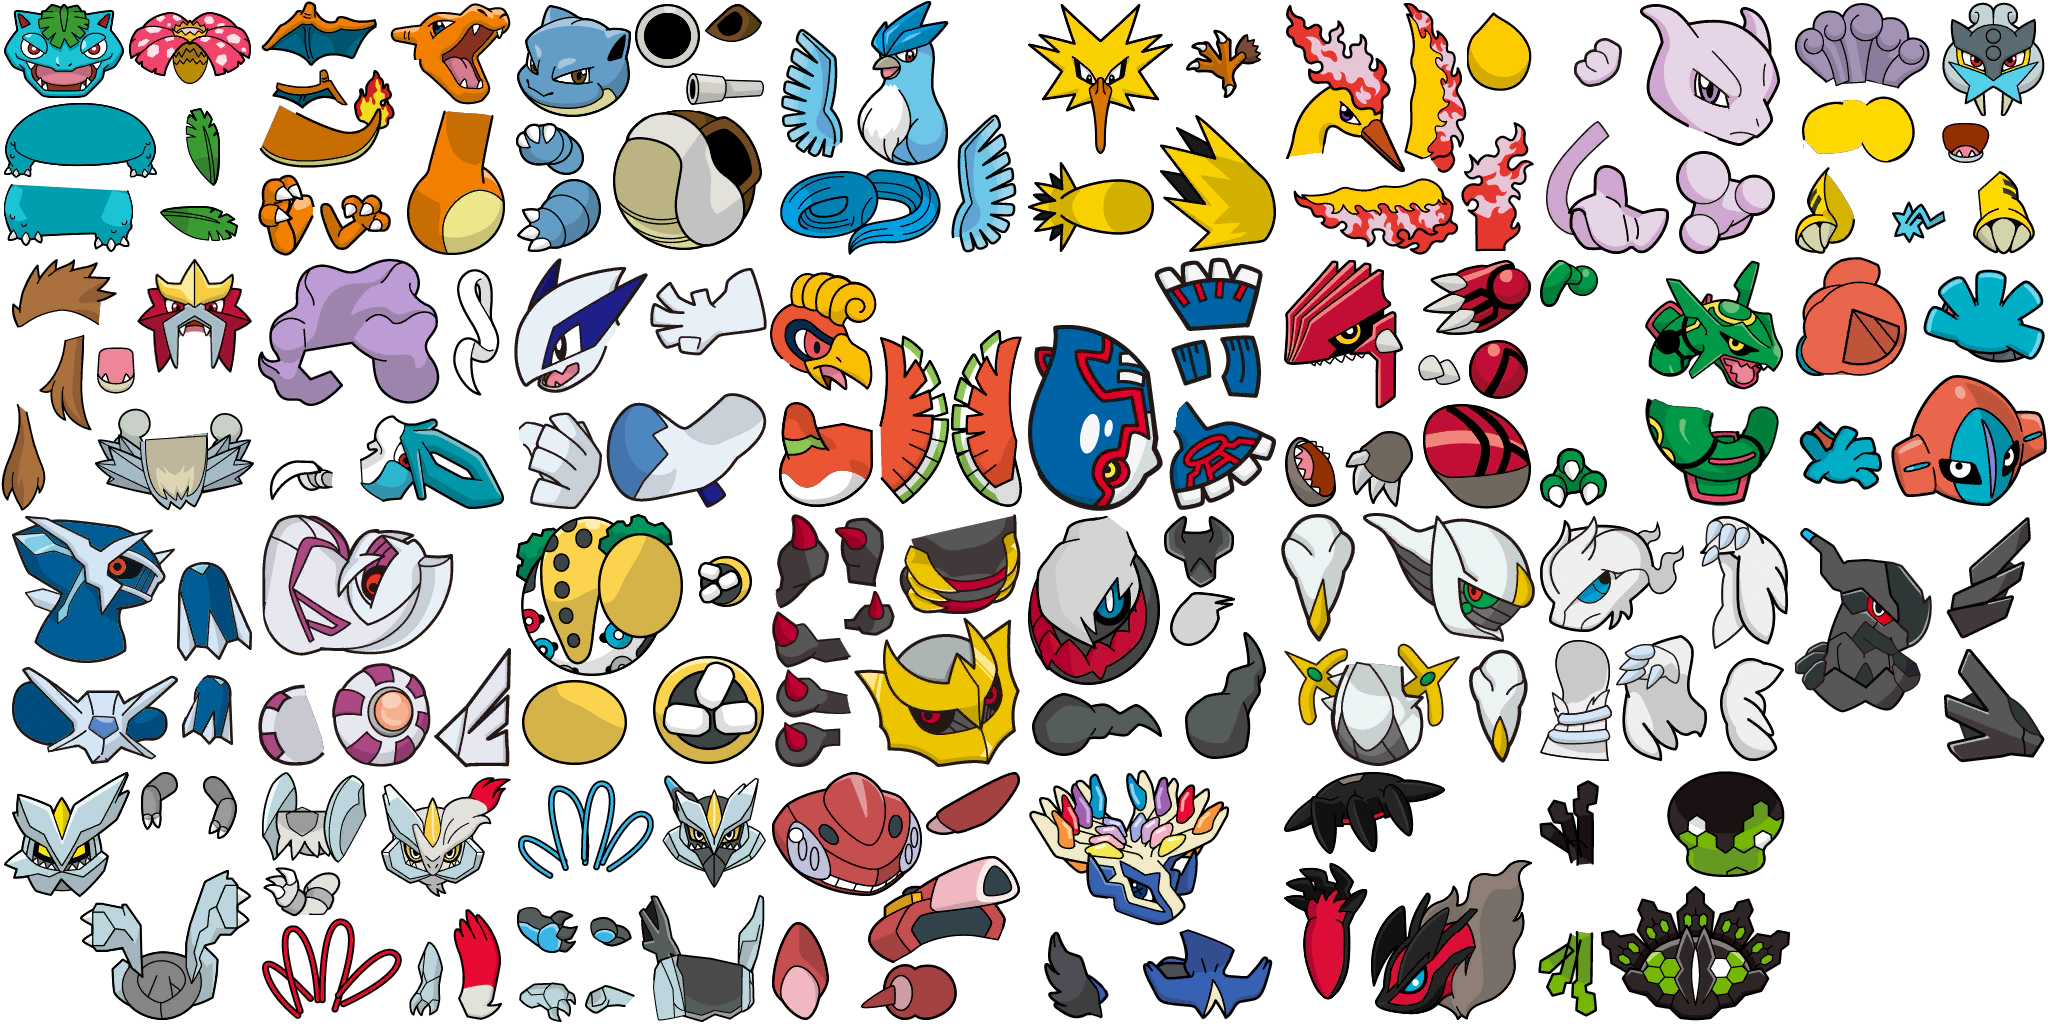 3DS Pokémon Battle Trozei! / Pokémon Link: Battle! - Pokémon The Spriters